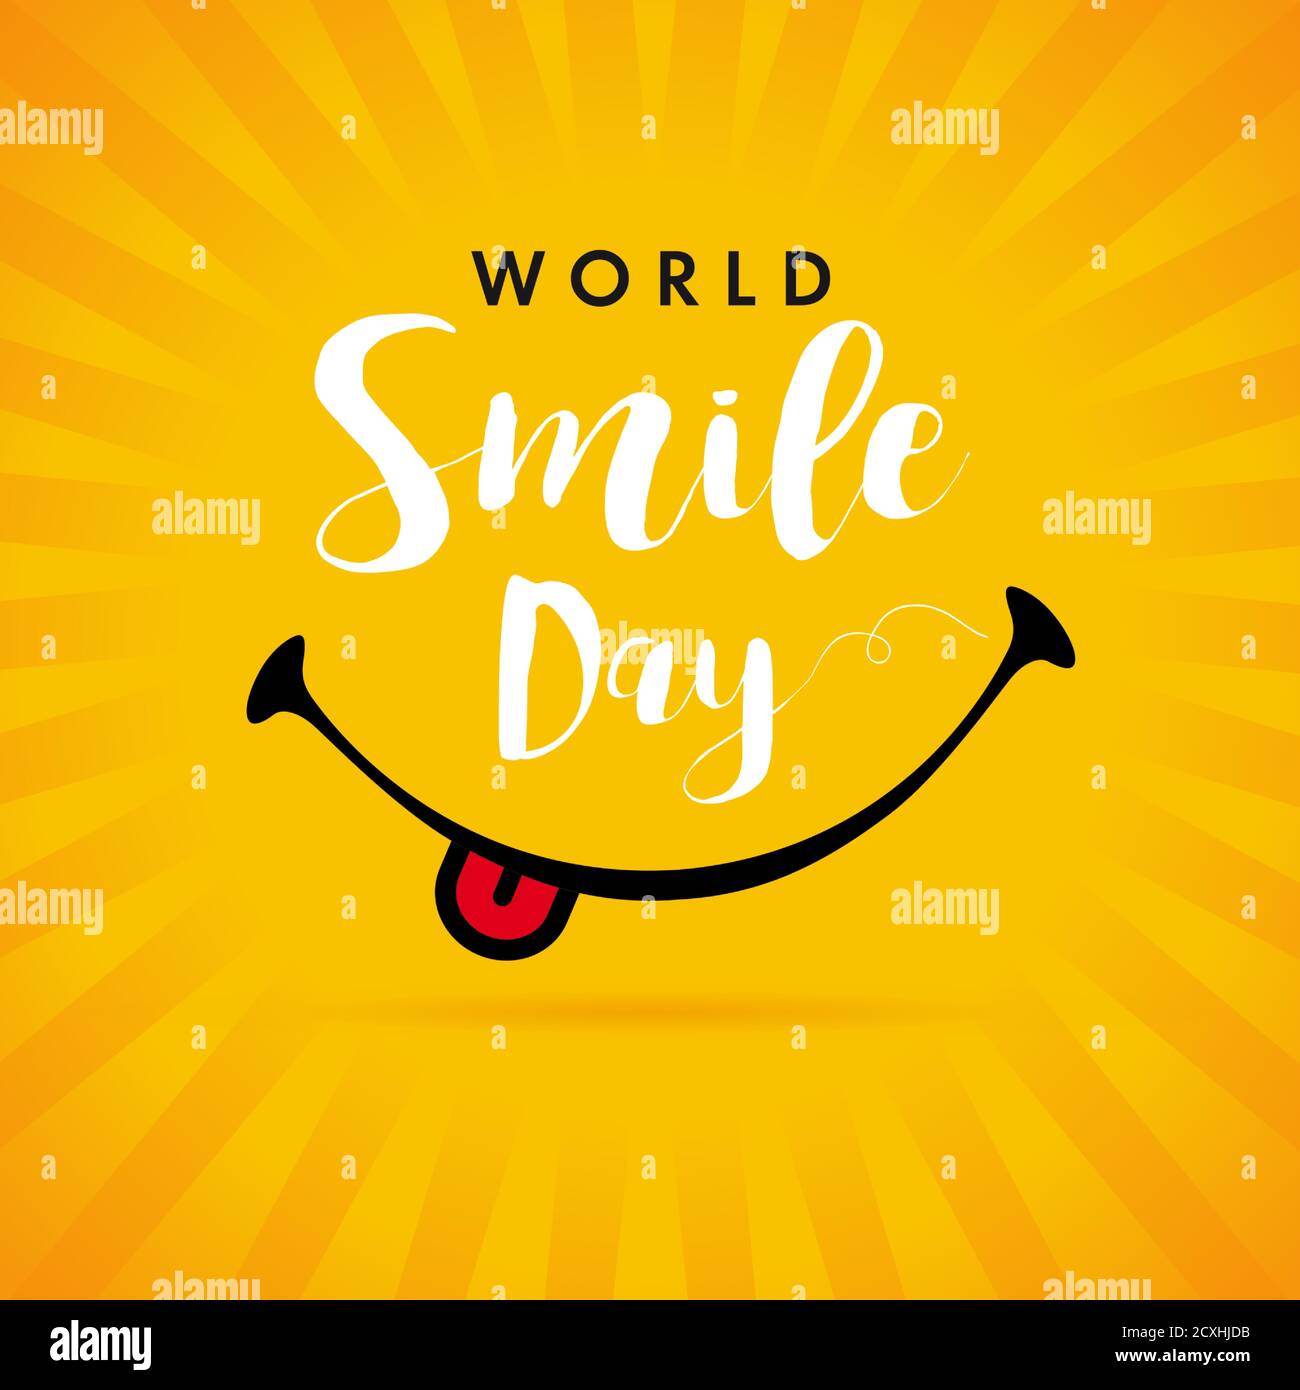 World Smile Day Gelb Balken Banner Vorlage Design Happy Smiling Symbol Und Text 2 Oktober Vektor Emoticon Illustration Stock Vektorgrafik Alamy